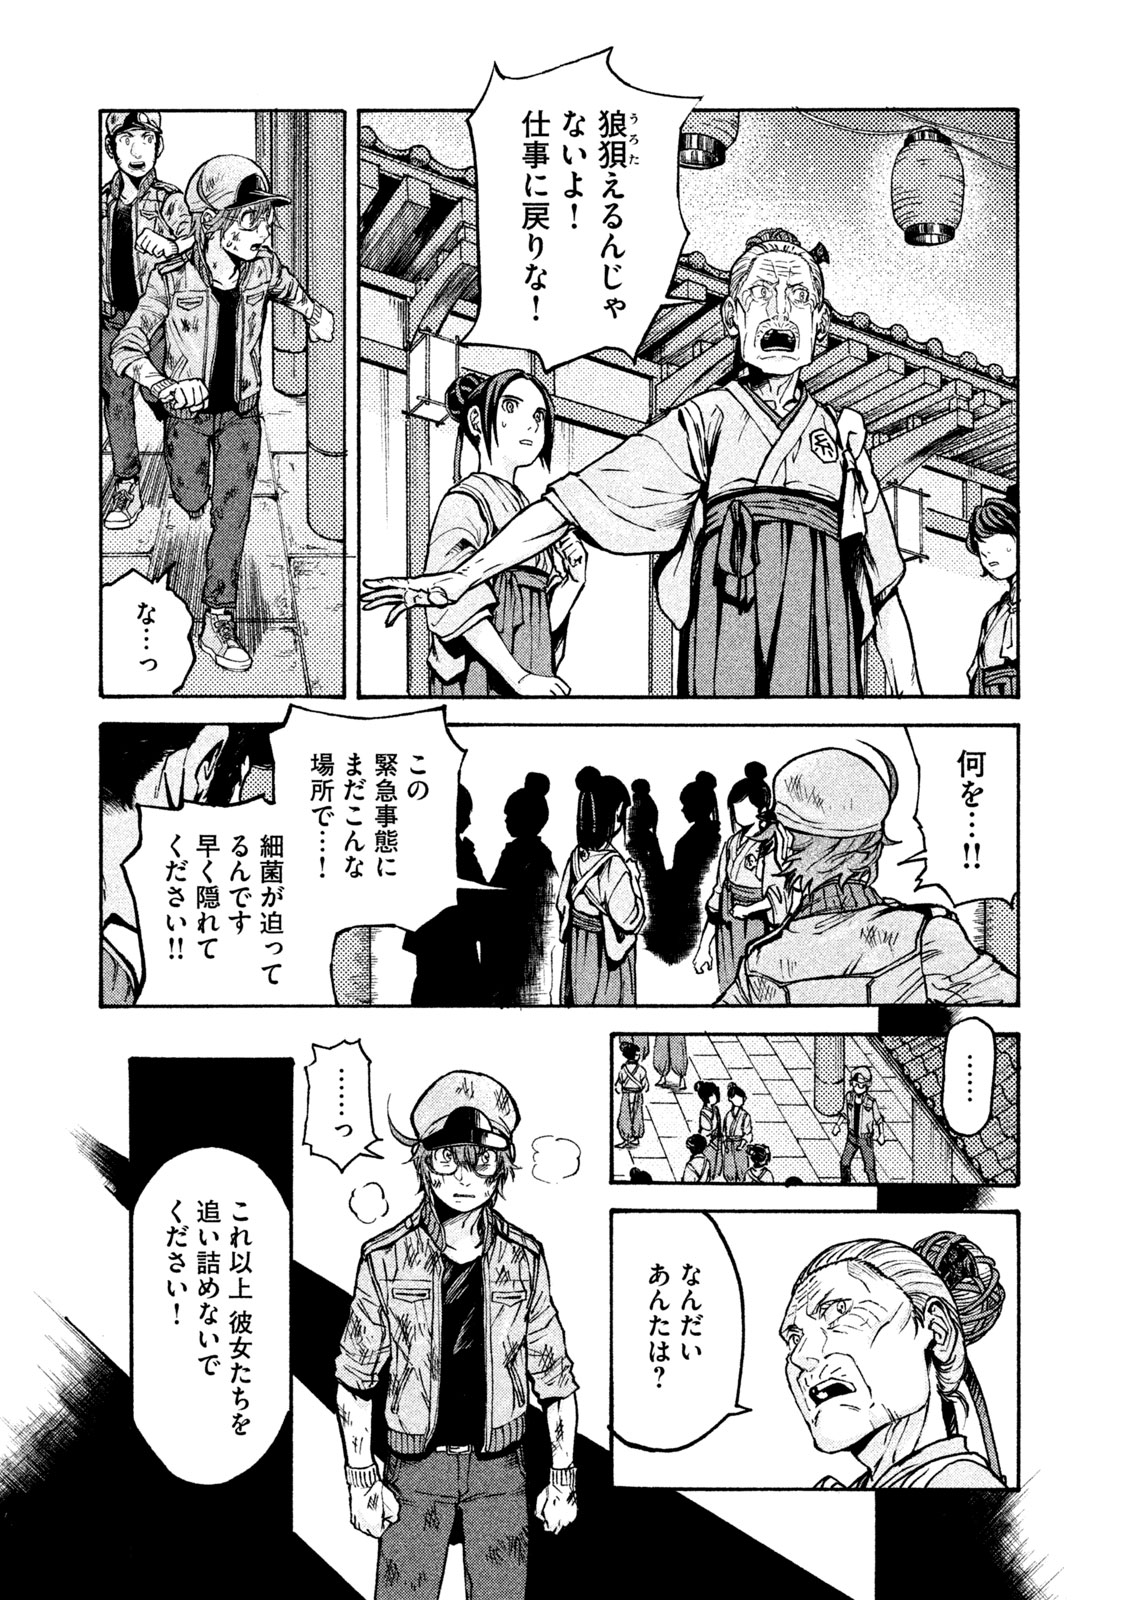 Hataraku Saibou BLACK - Chapter 14 - Page 7